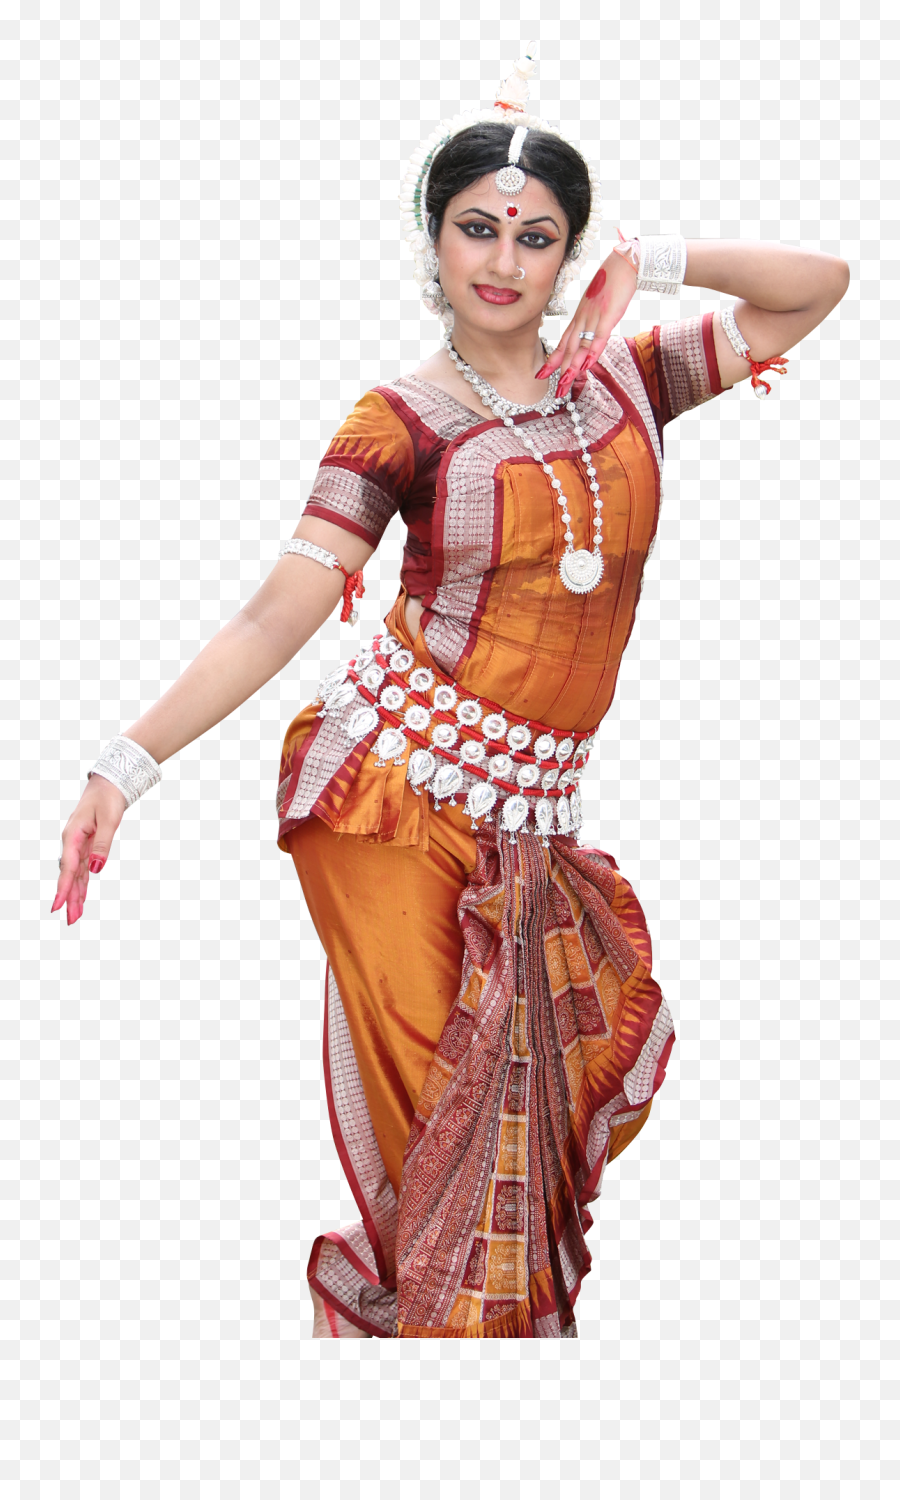 Png Transparent Odissi Dance - Odissi Dance Images Hd,Dancers Png